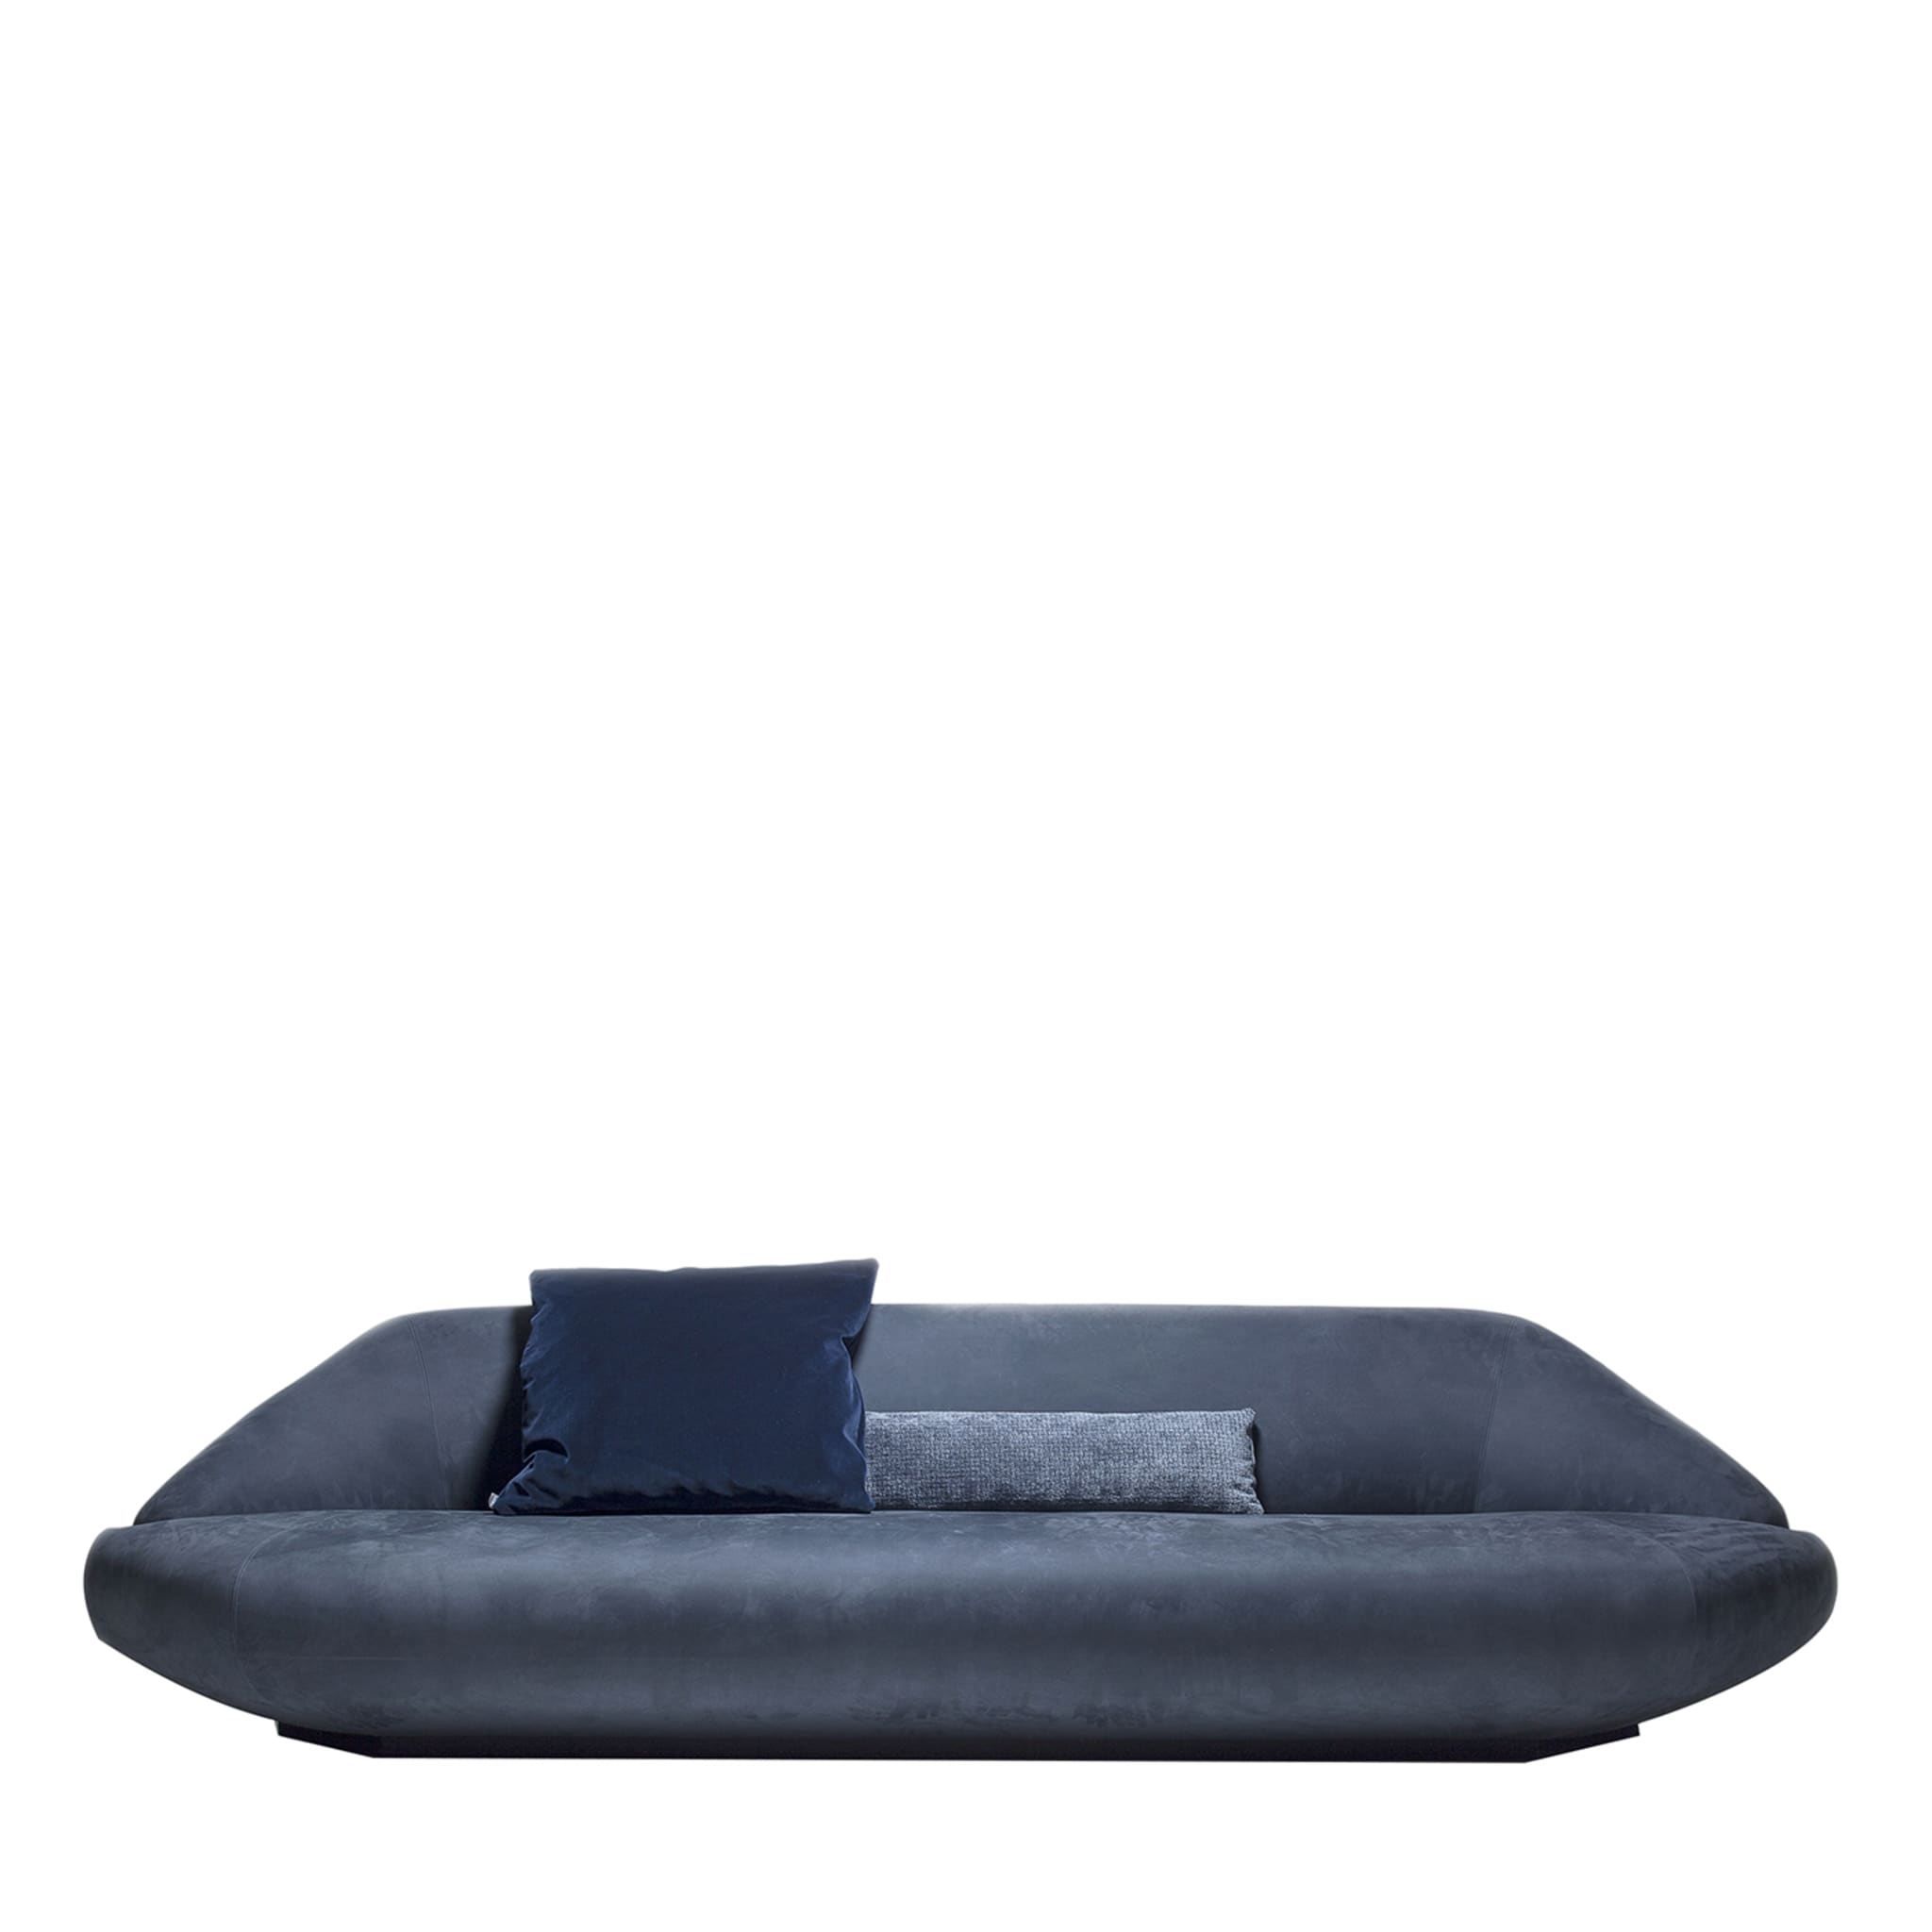 Blaues solides Sofa von Gianluigi Landoni - Hauptansicht